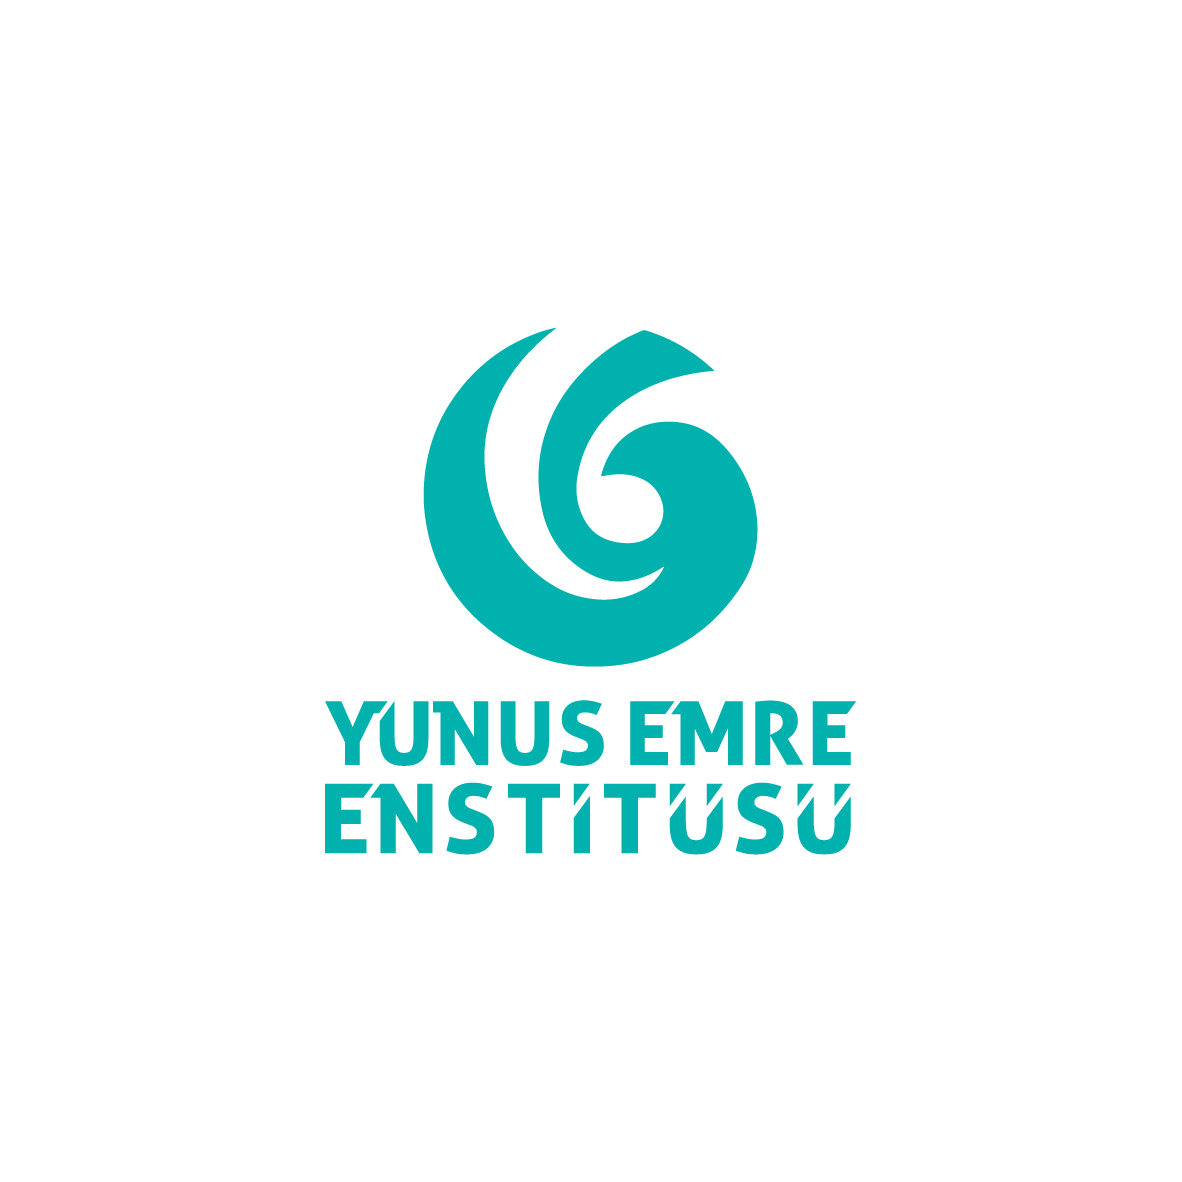 yunus_emre_enstitüsü logopng